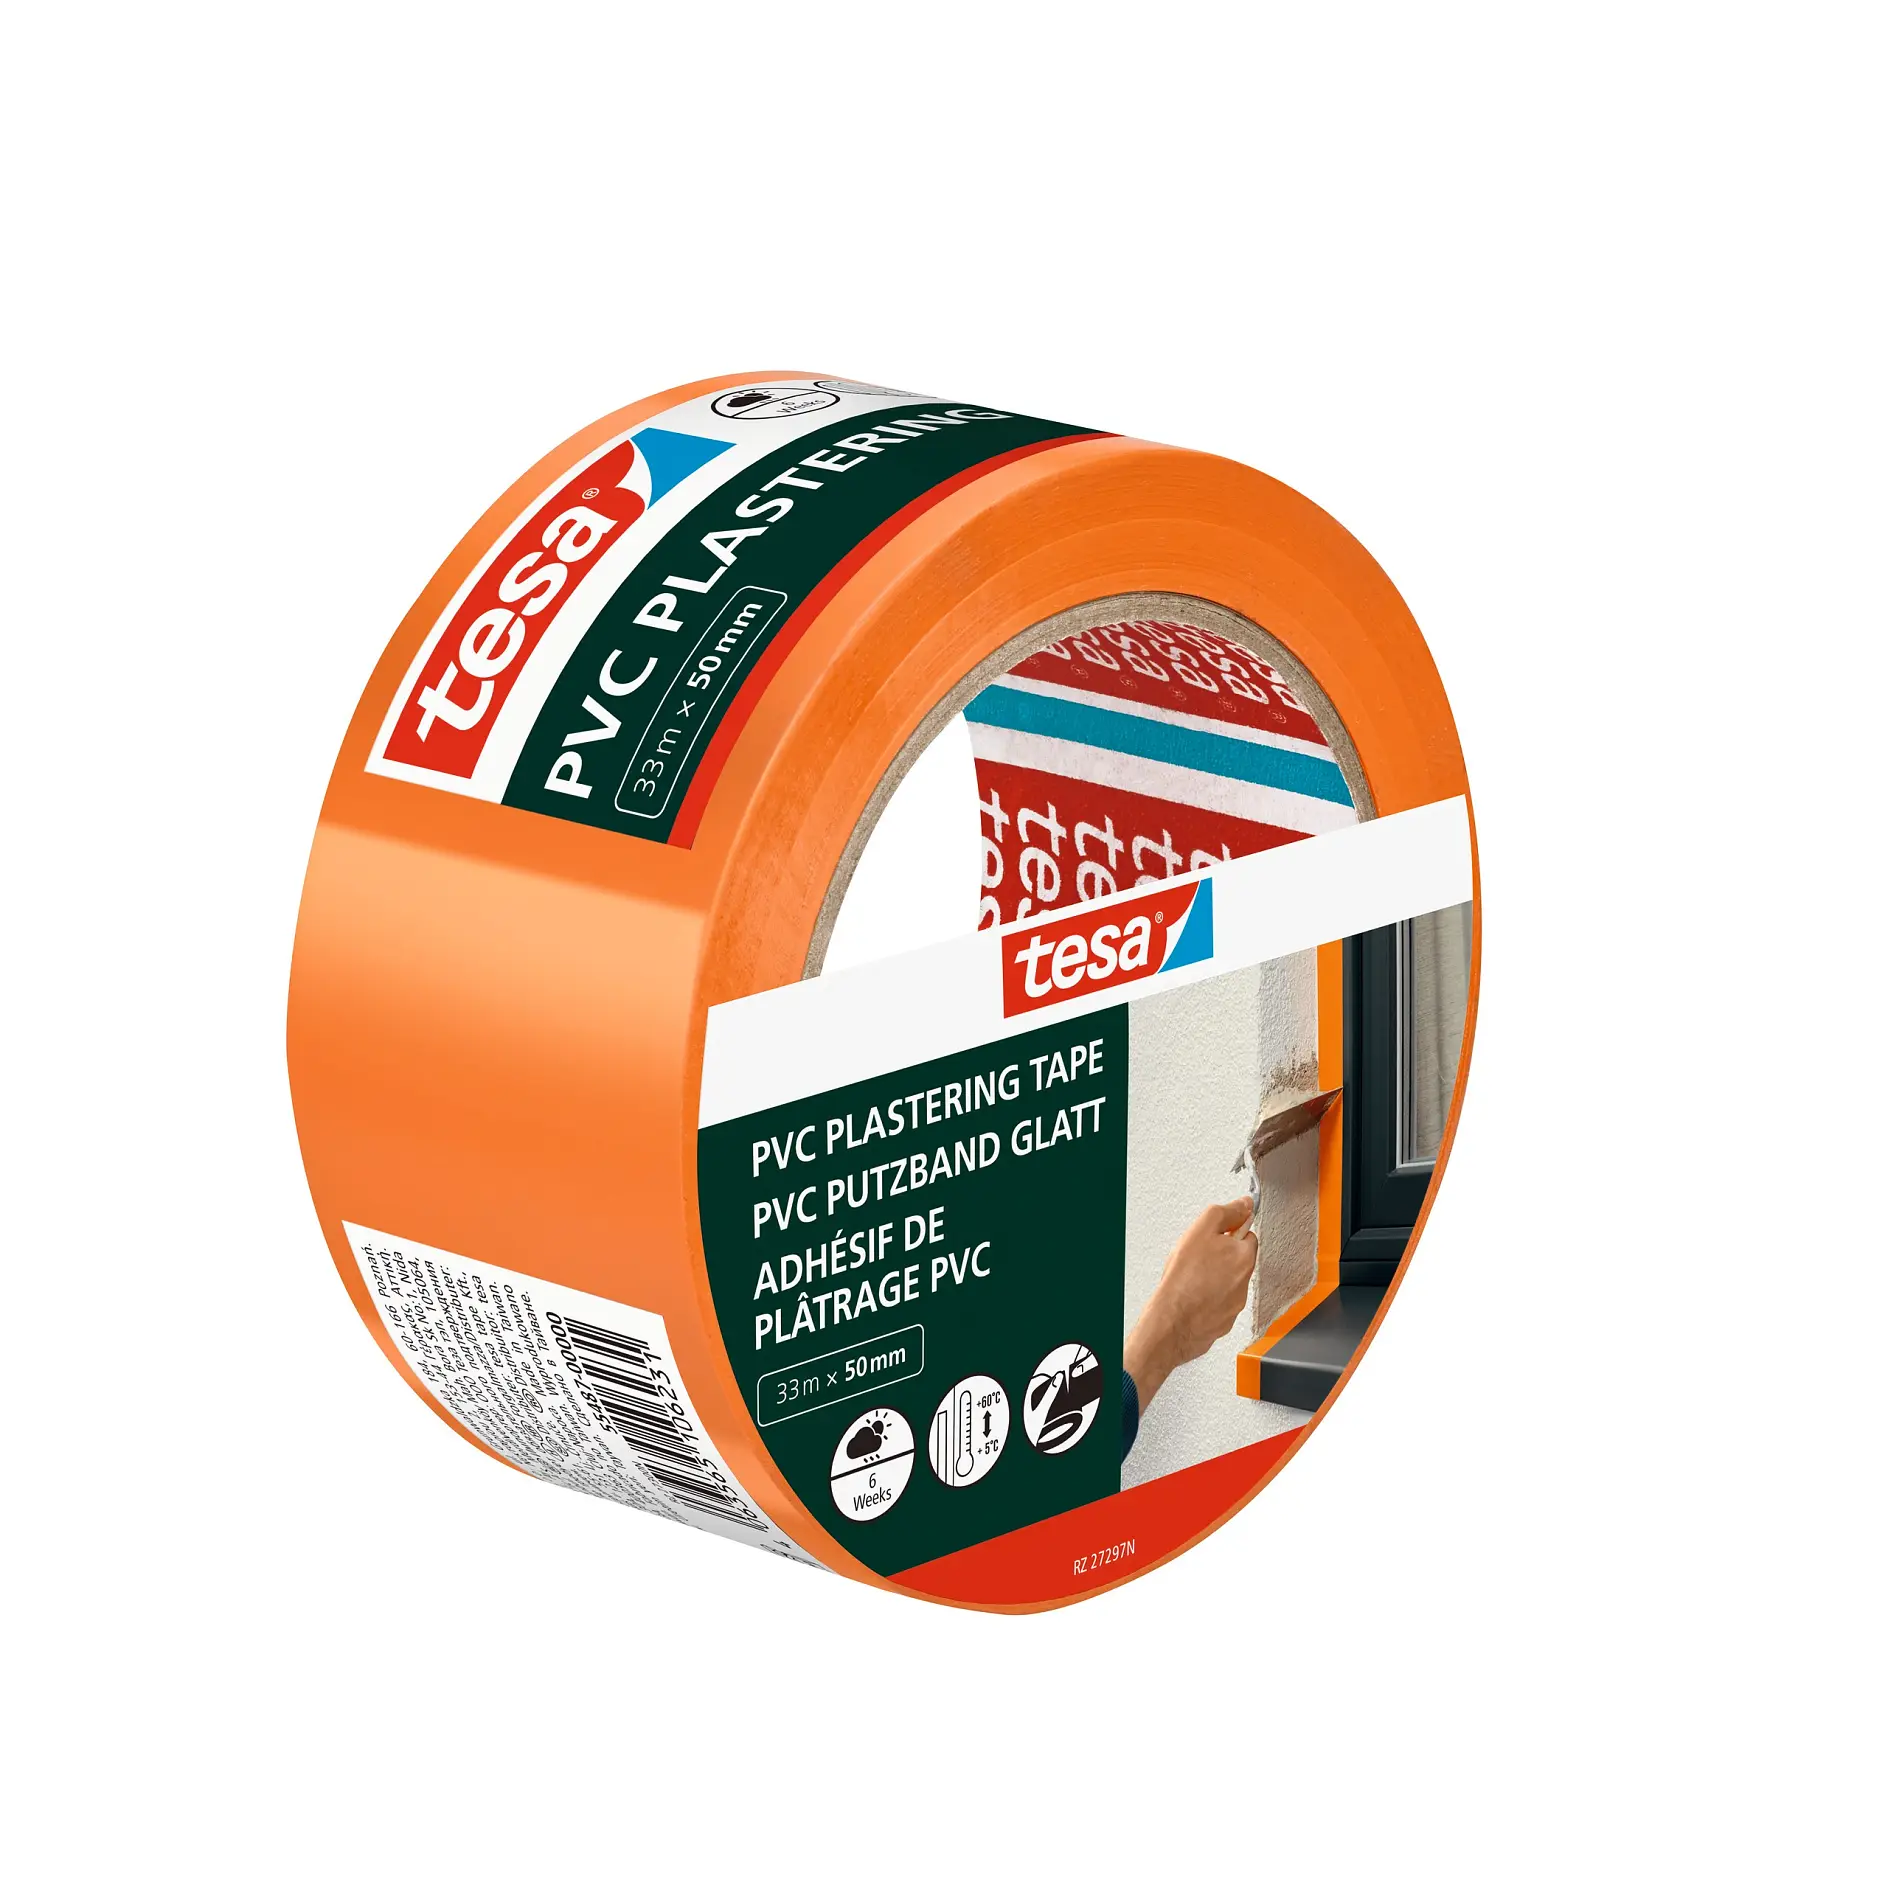 [en-en] tesa Professional&nbsp;Plastering Tape, PVC orange, 33m x 50mm (Consumer)